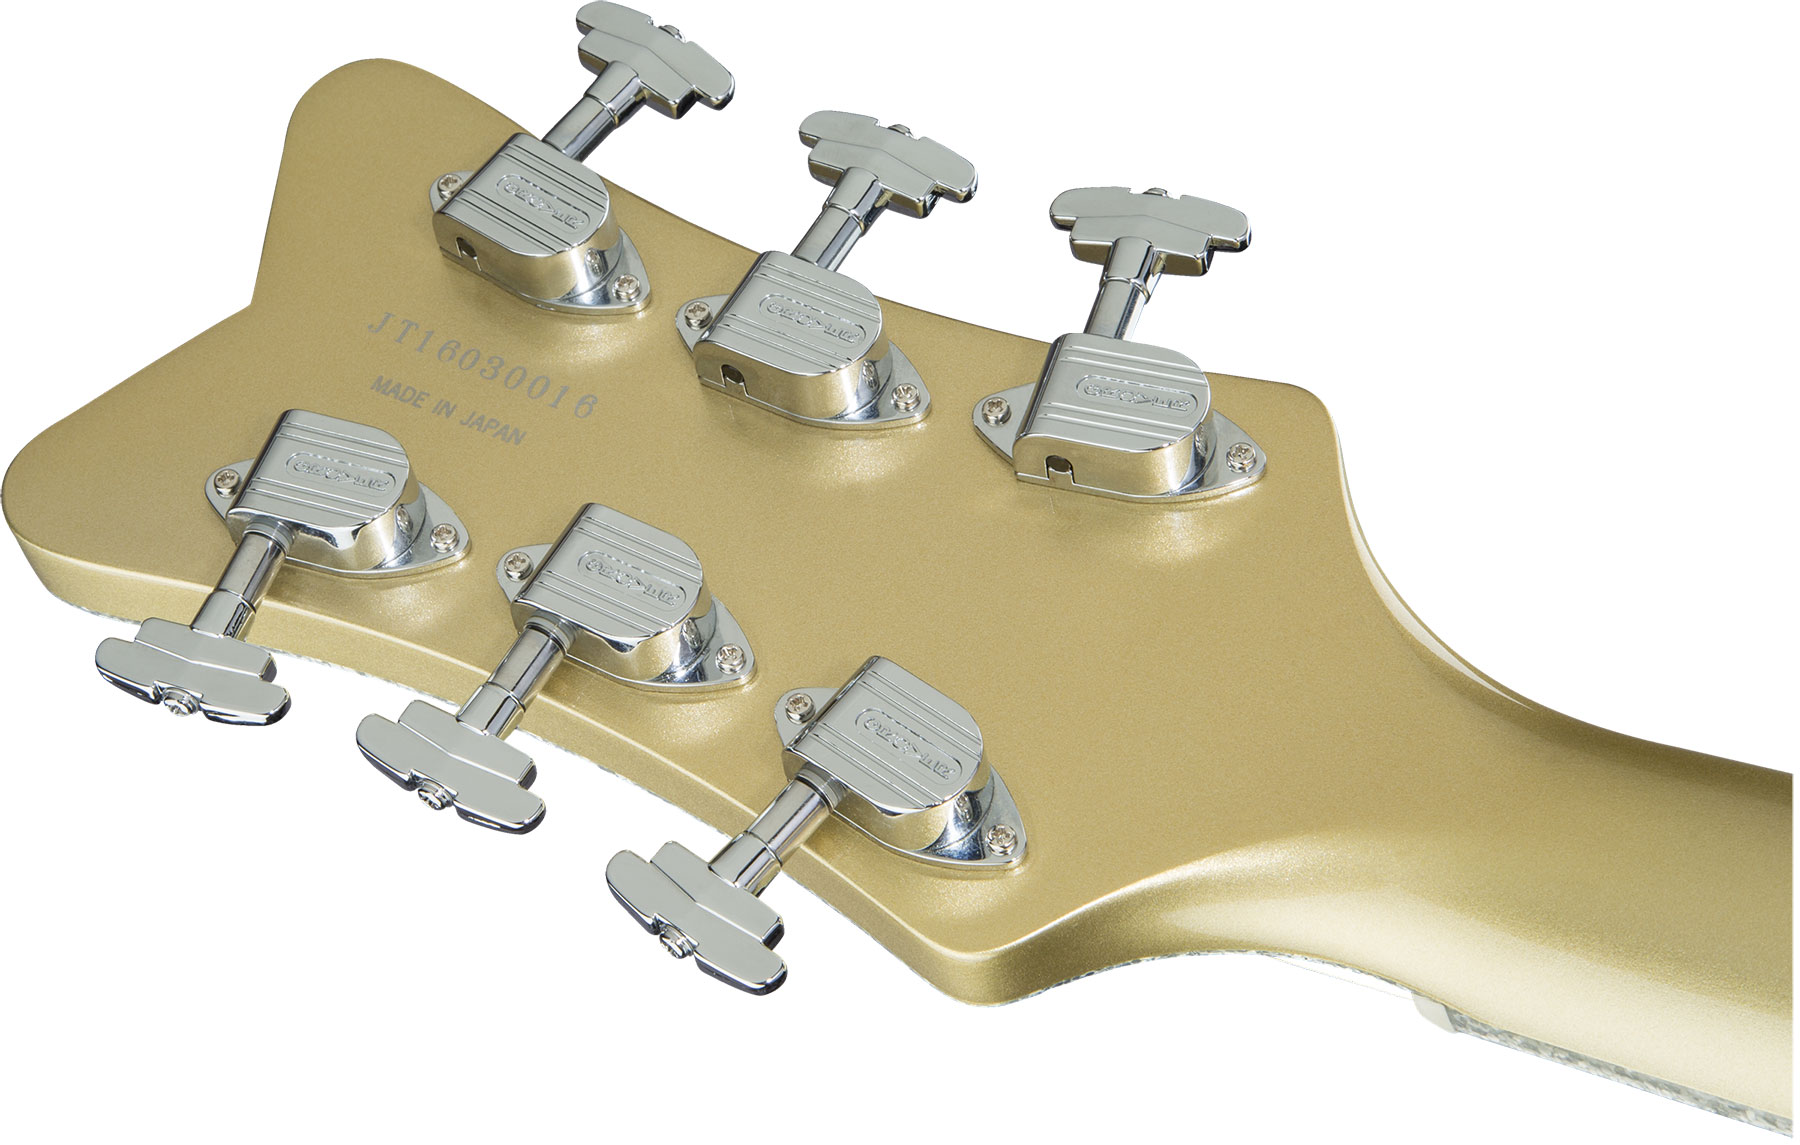 Gretsch G6134t Penguin Ltd Professional Japon Hh Trem Bigsby Eb - Casino Gold - Single cut electric guitar - Variation 3